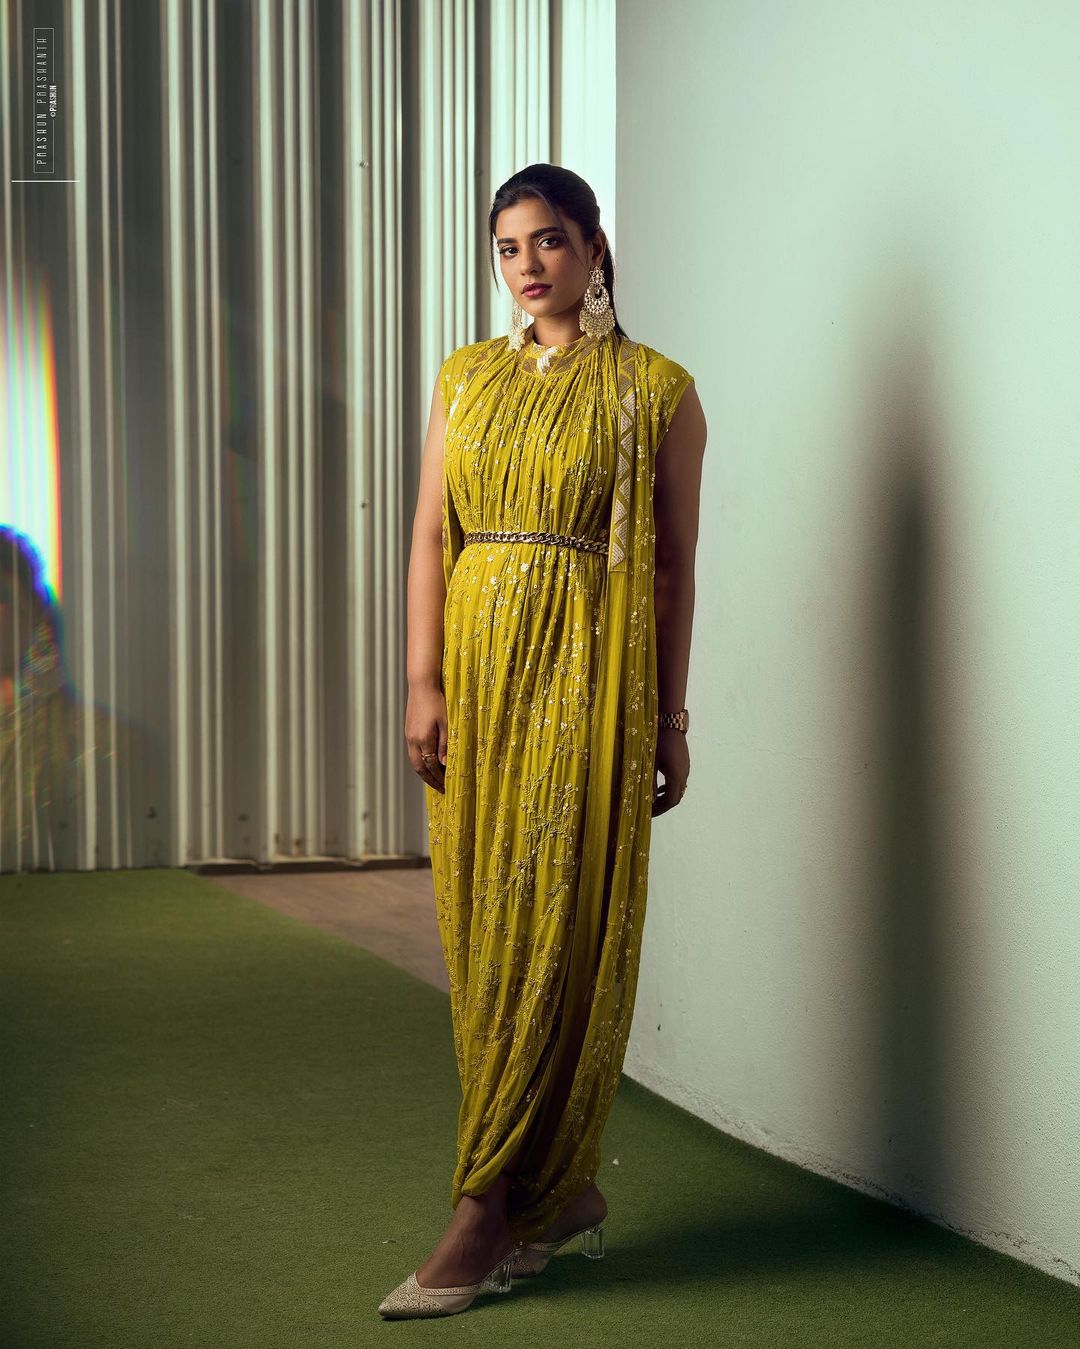 aiswarya rajesh latest photos in full dress